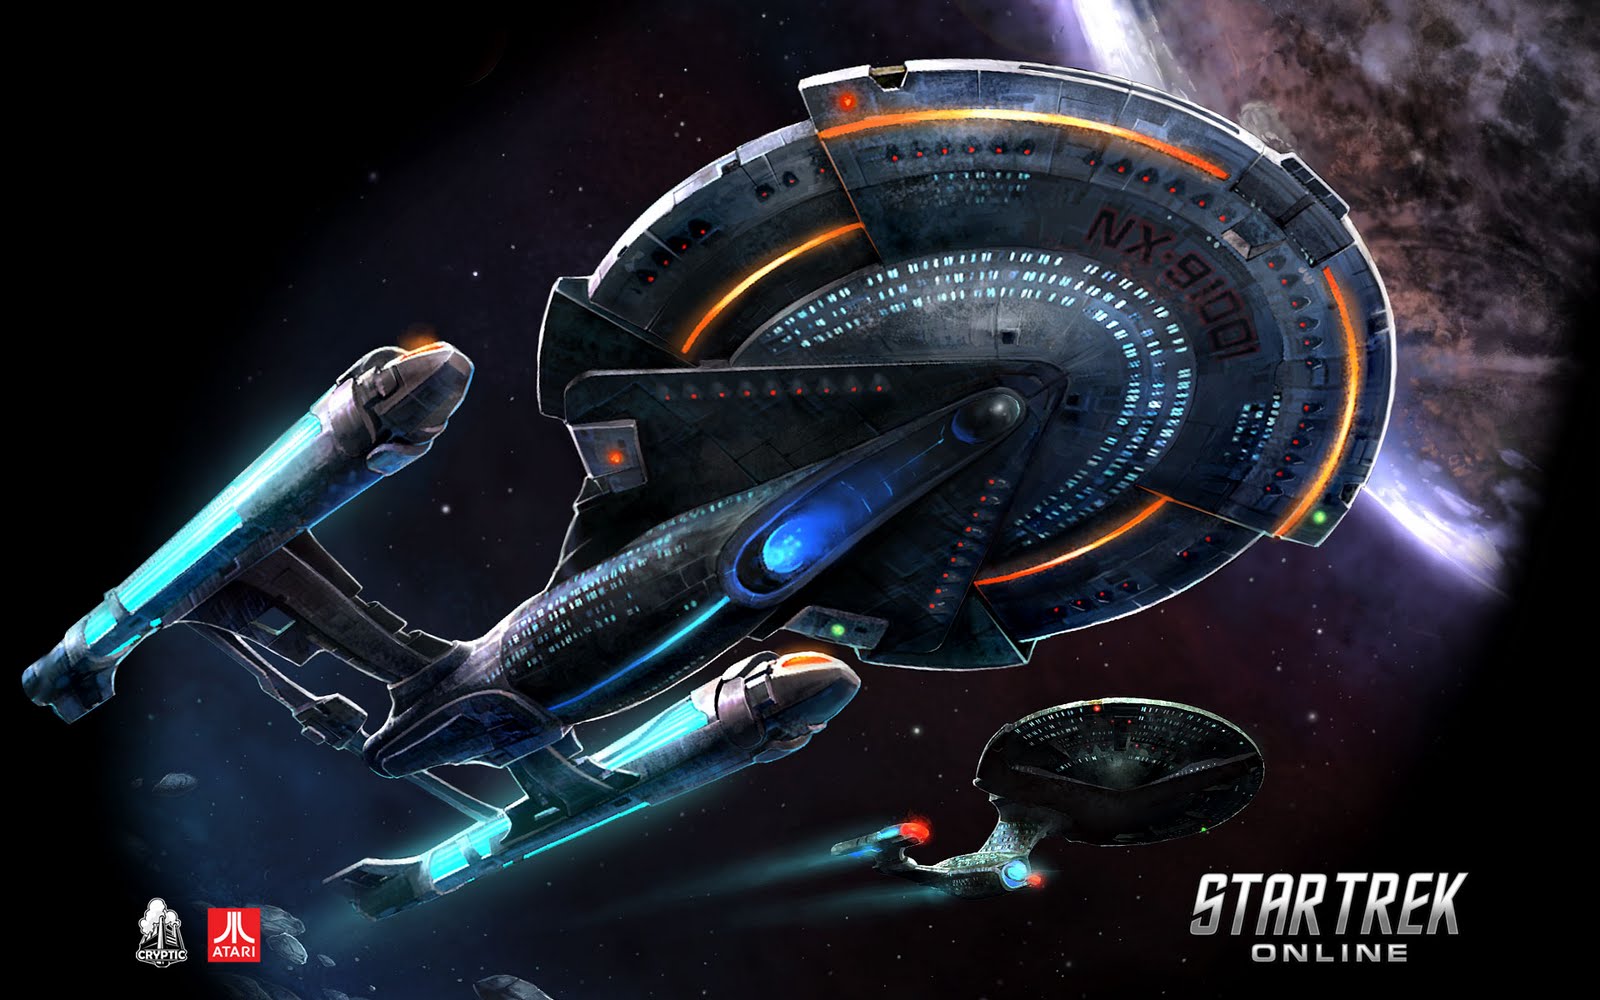 Star Trek Online Wallpaper Pc Games